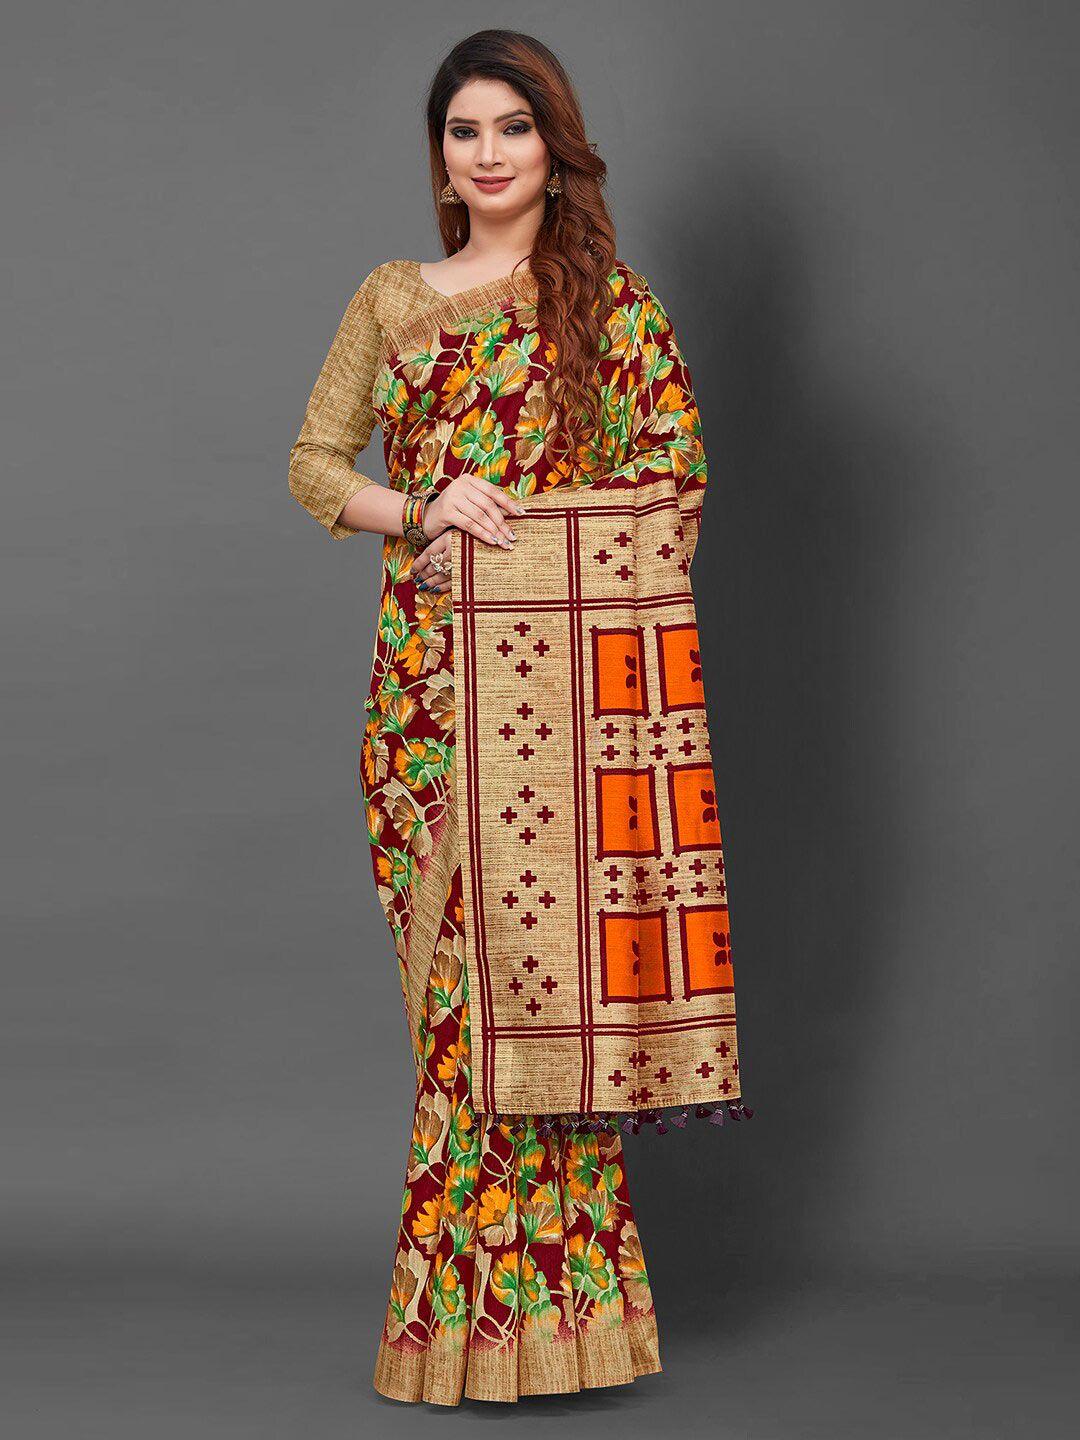 kalini floral printed festive saree